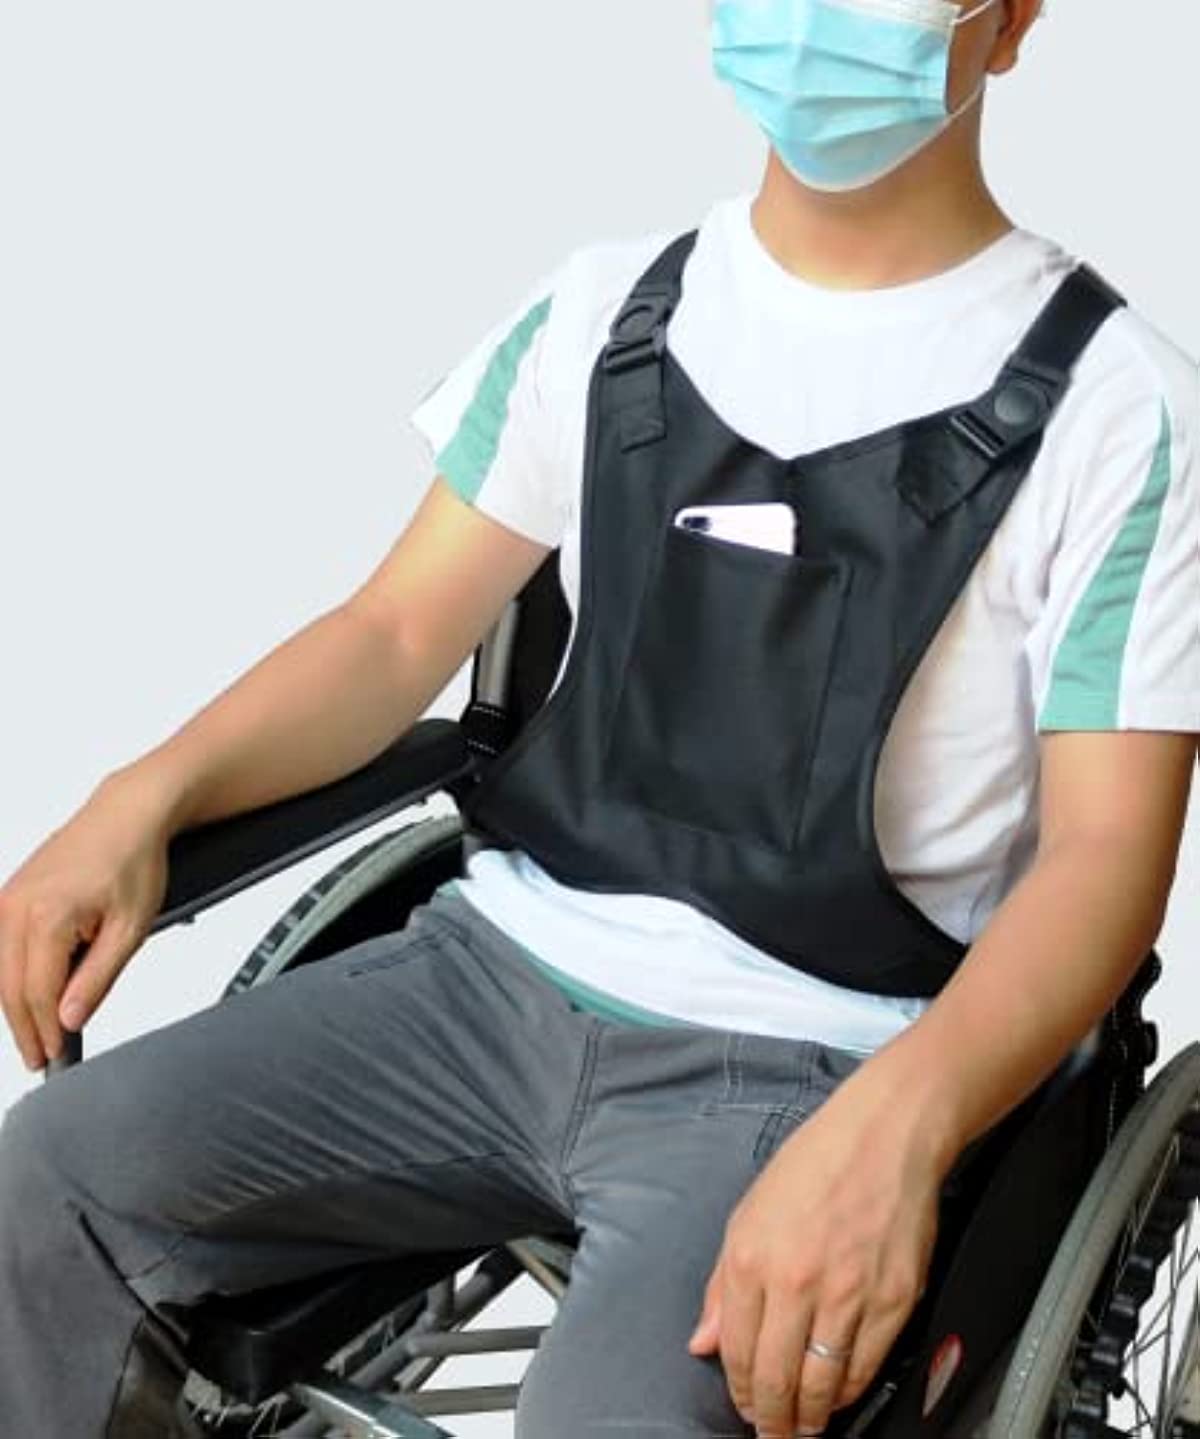 Wheelchair Seatbelt Belt Restraints Straps - KELBBO Safety Belt for Elderly Patients Care Safety Harness Chair Waist Lap Strap for Elderly (Vest Design)